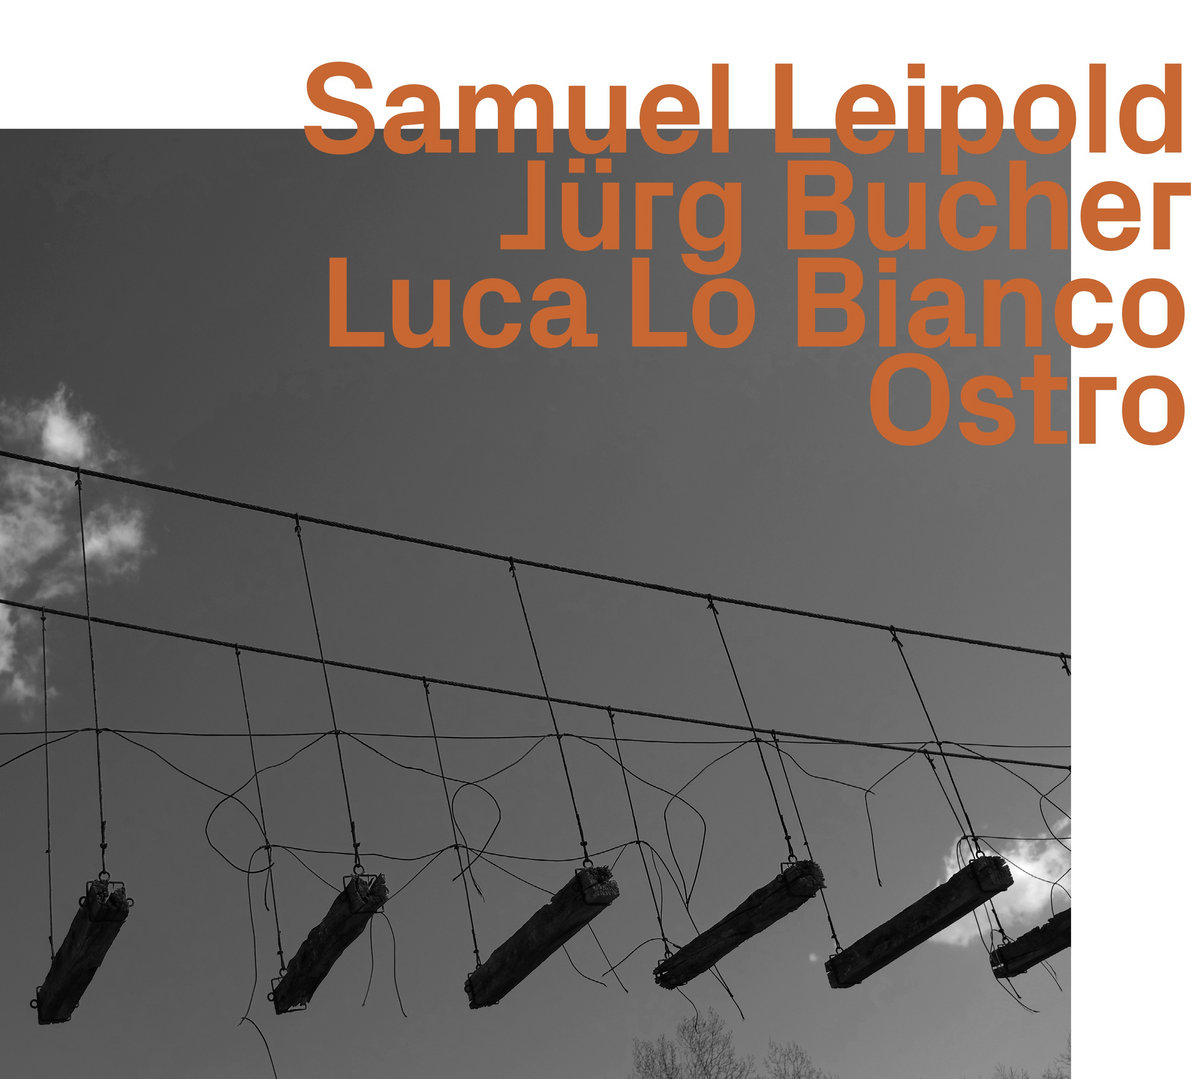 Samuel Leipold, Jürg Bucher, Luca Lo Bianco, Ostro